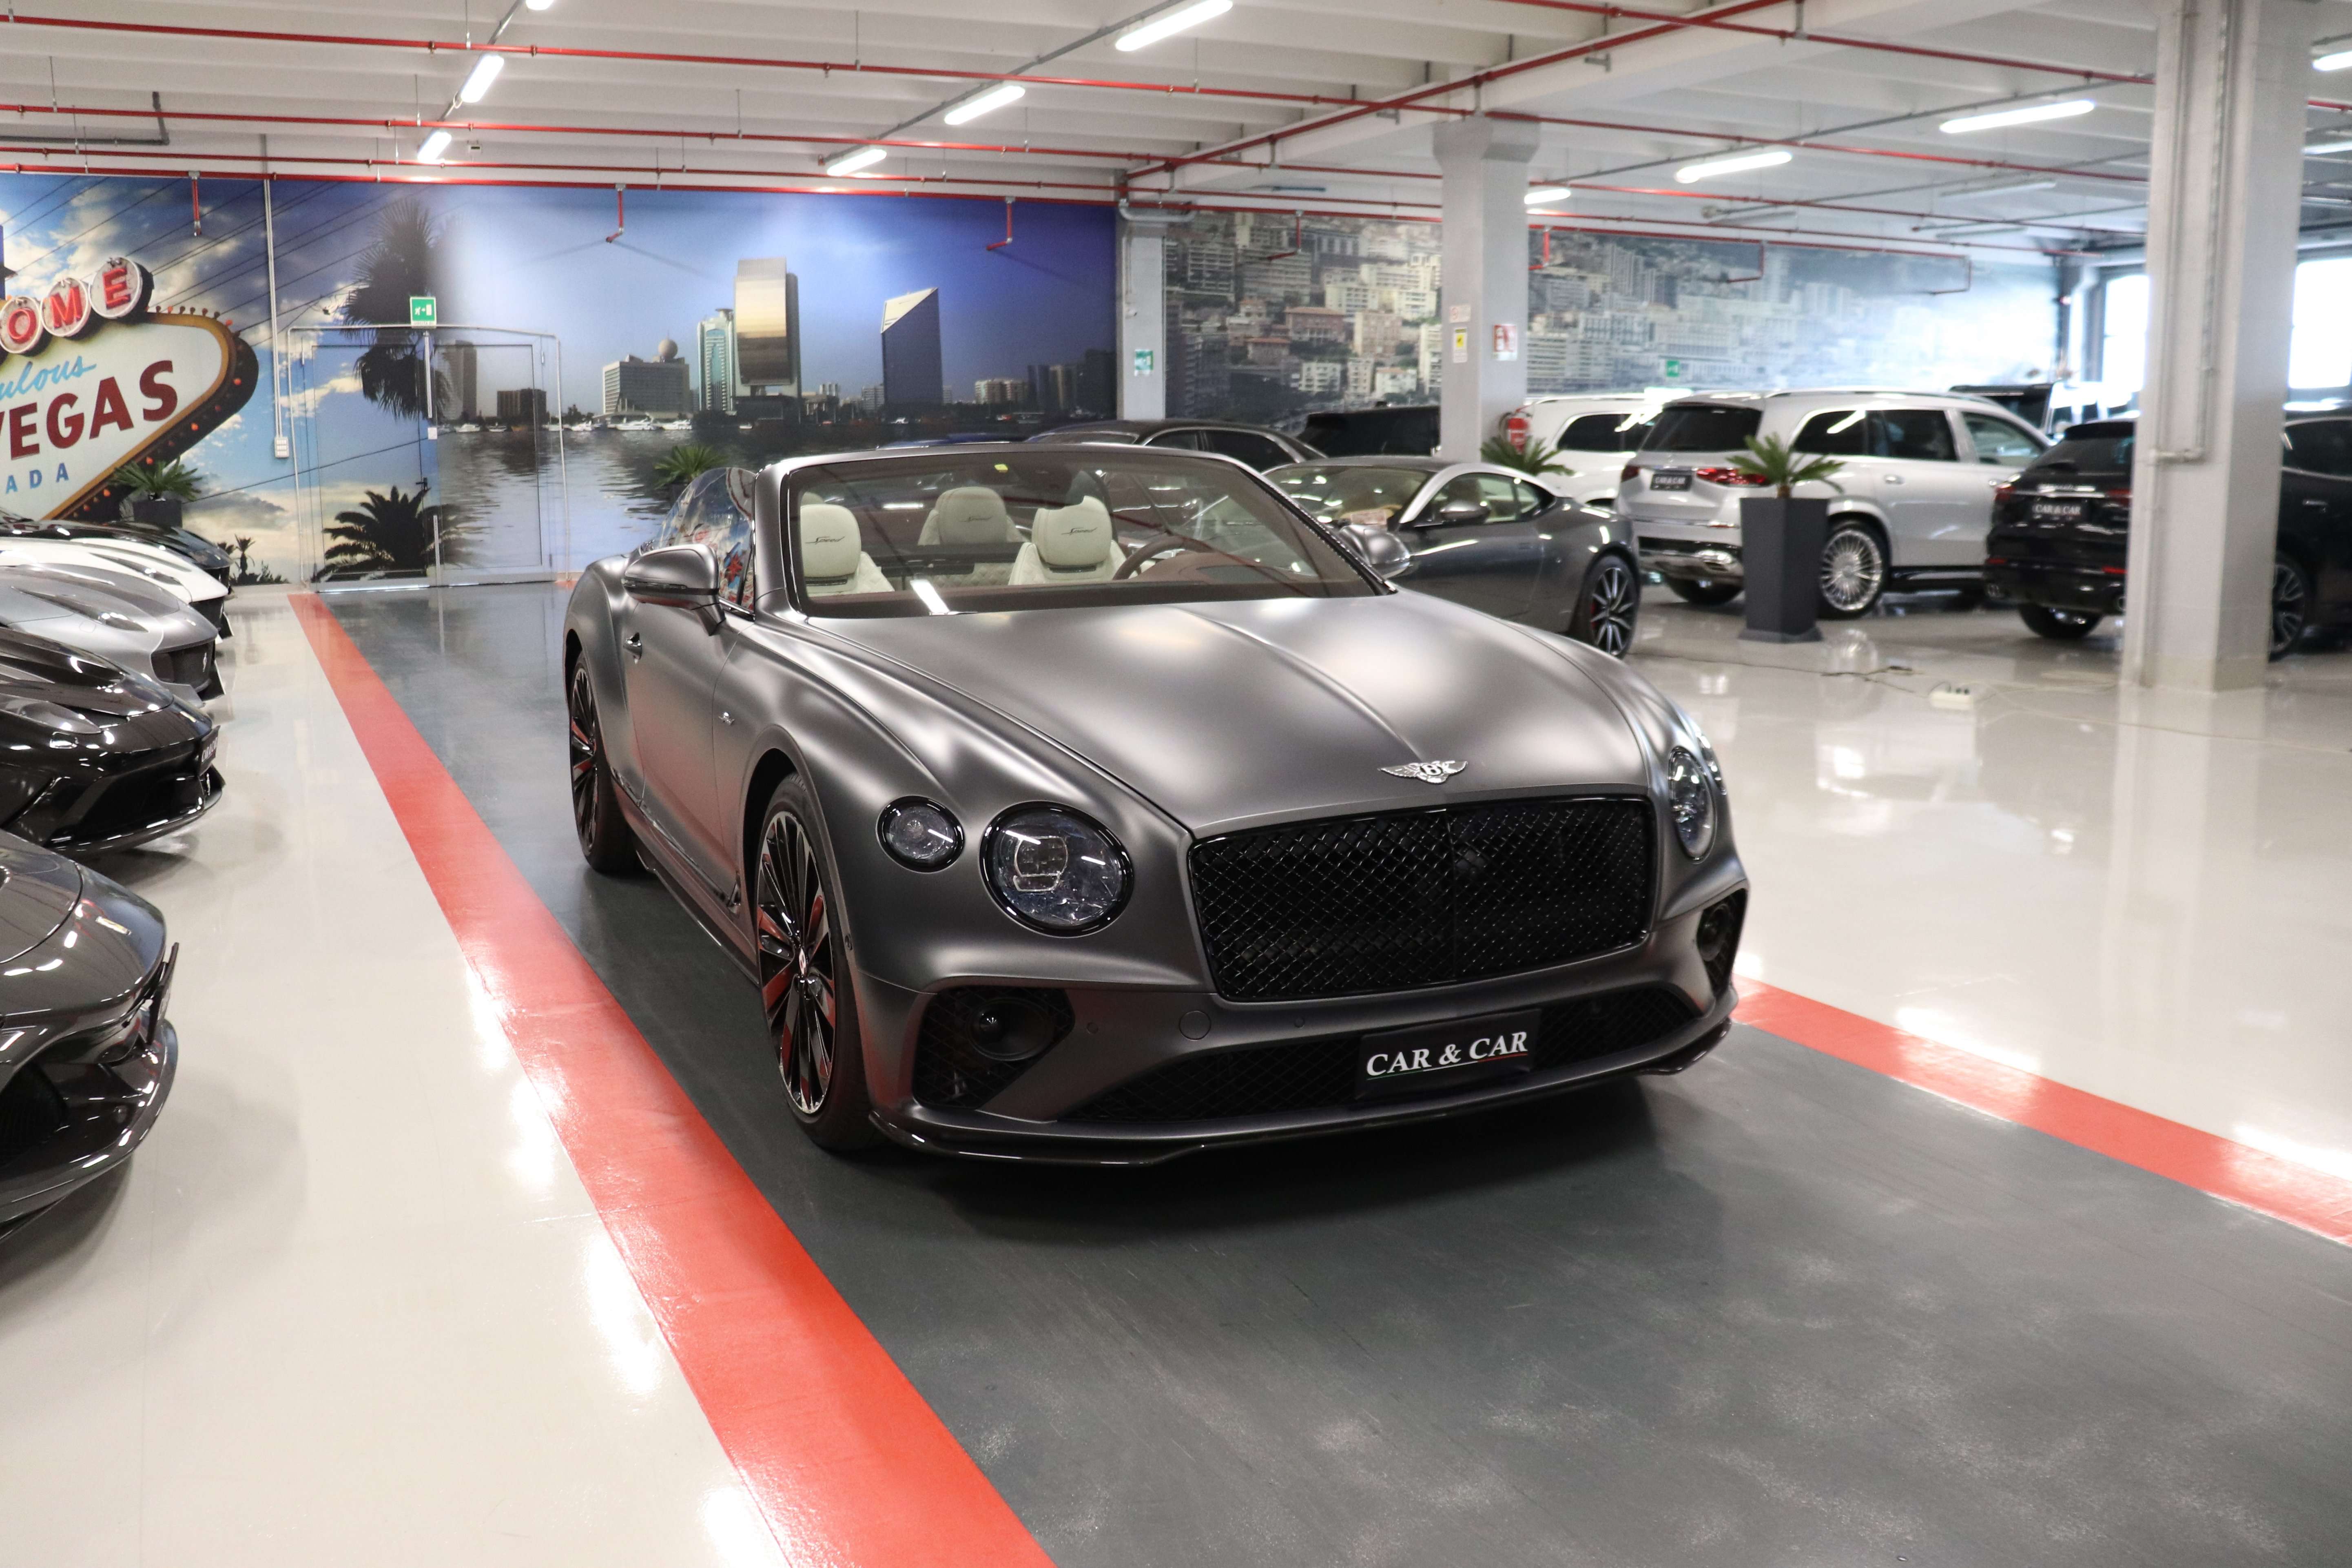 Bentley Continental Convertible in Grey used in Zibido San Giacomo – Milano for € 388,000.-